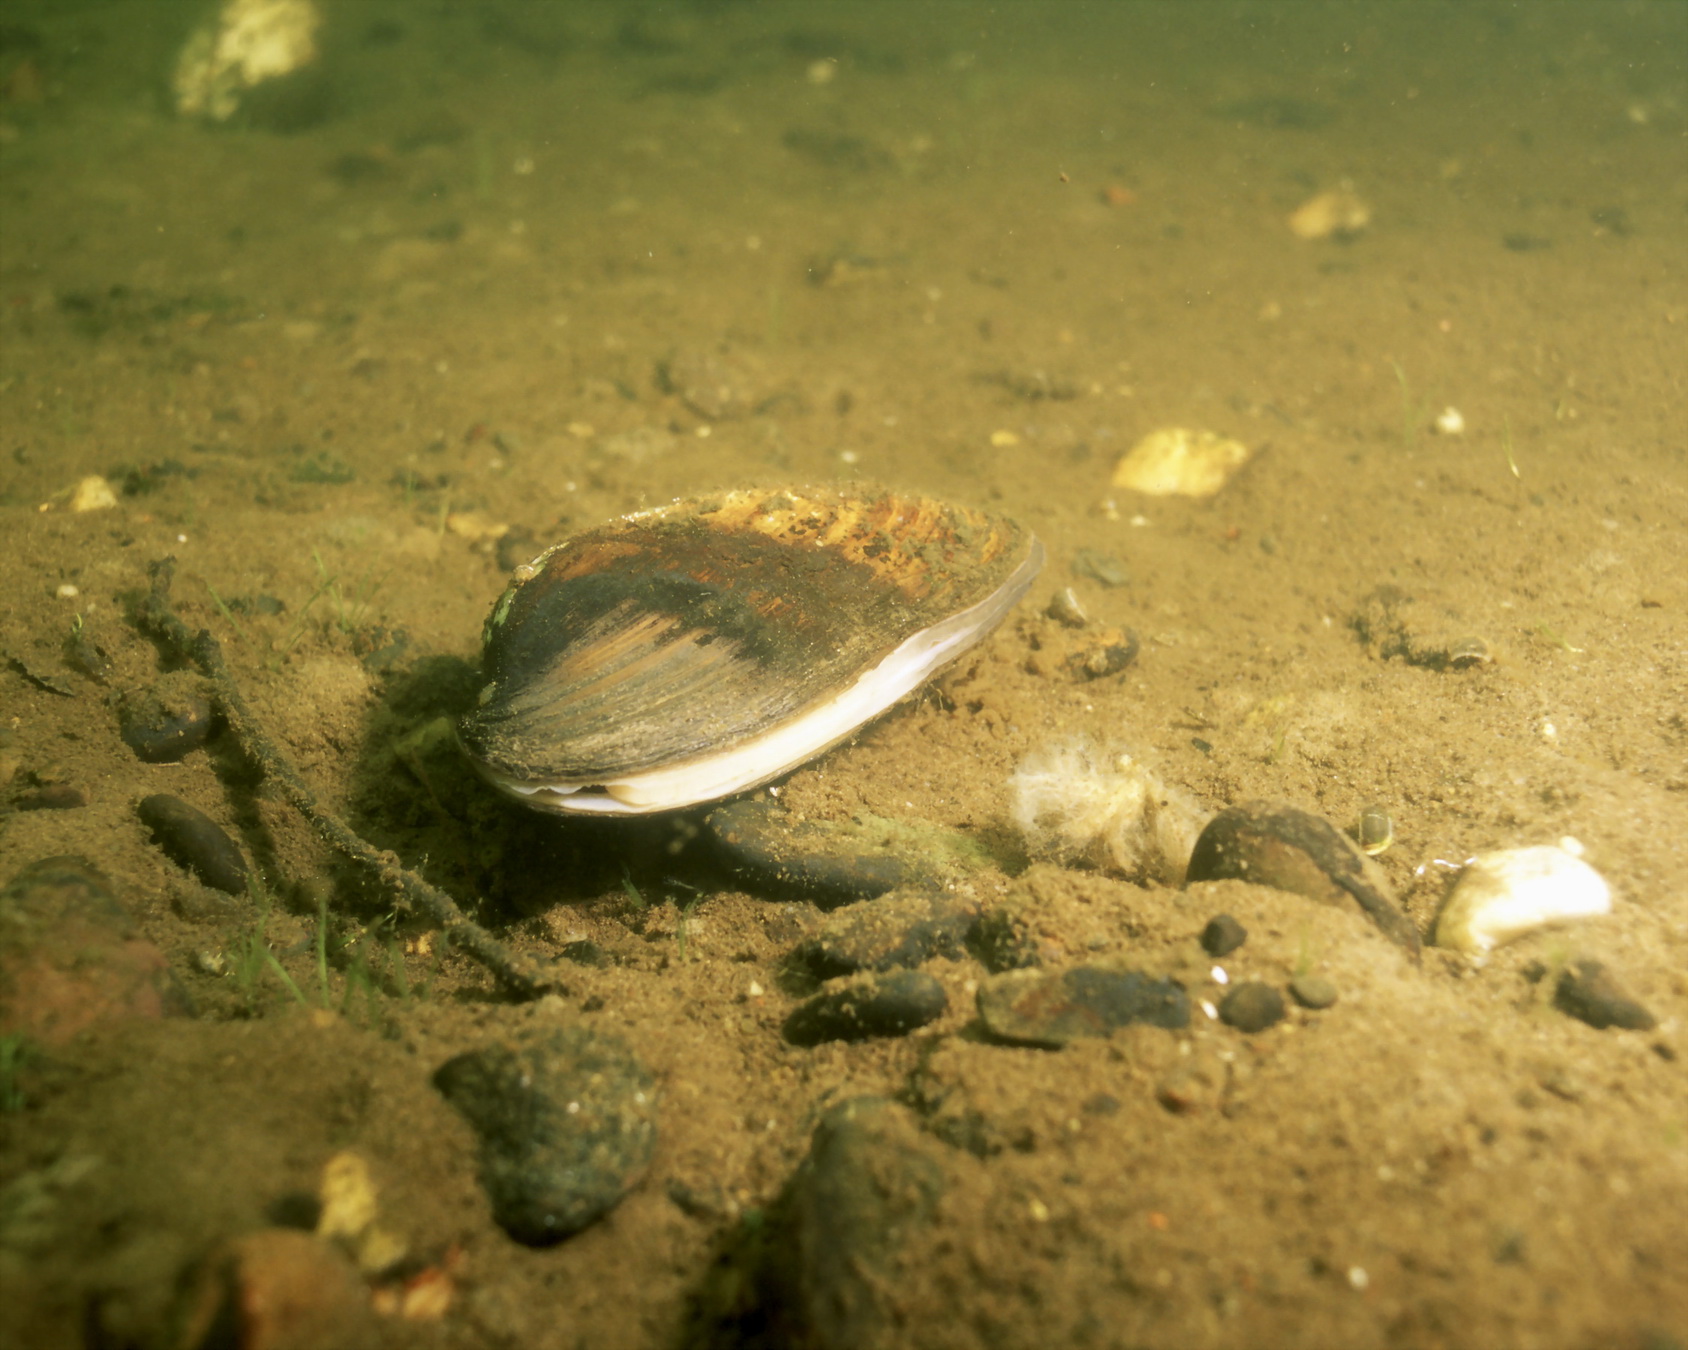 моллюски охотского моря